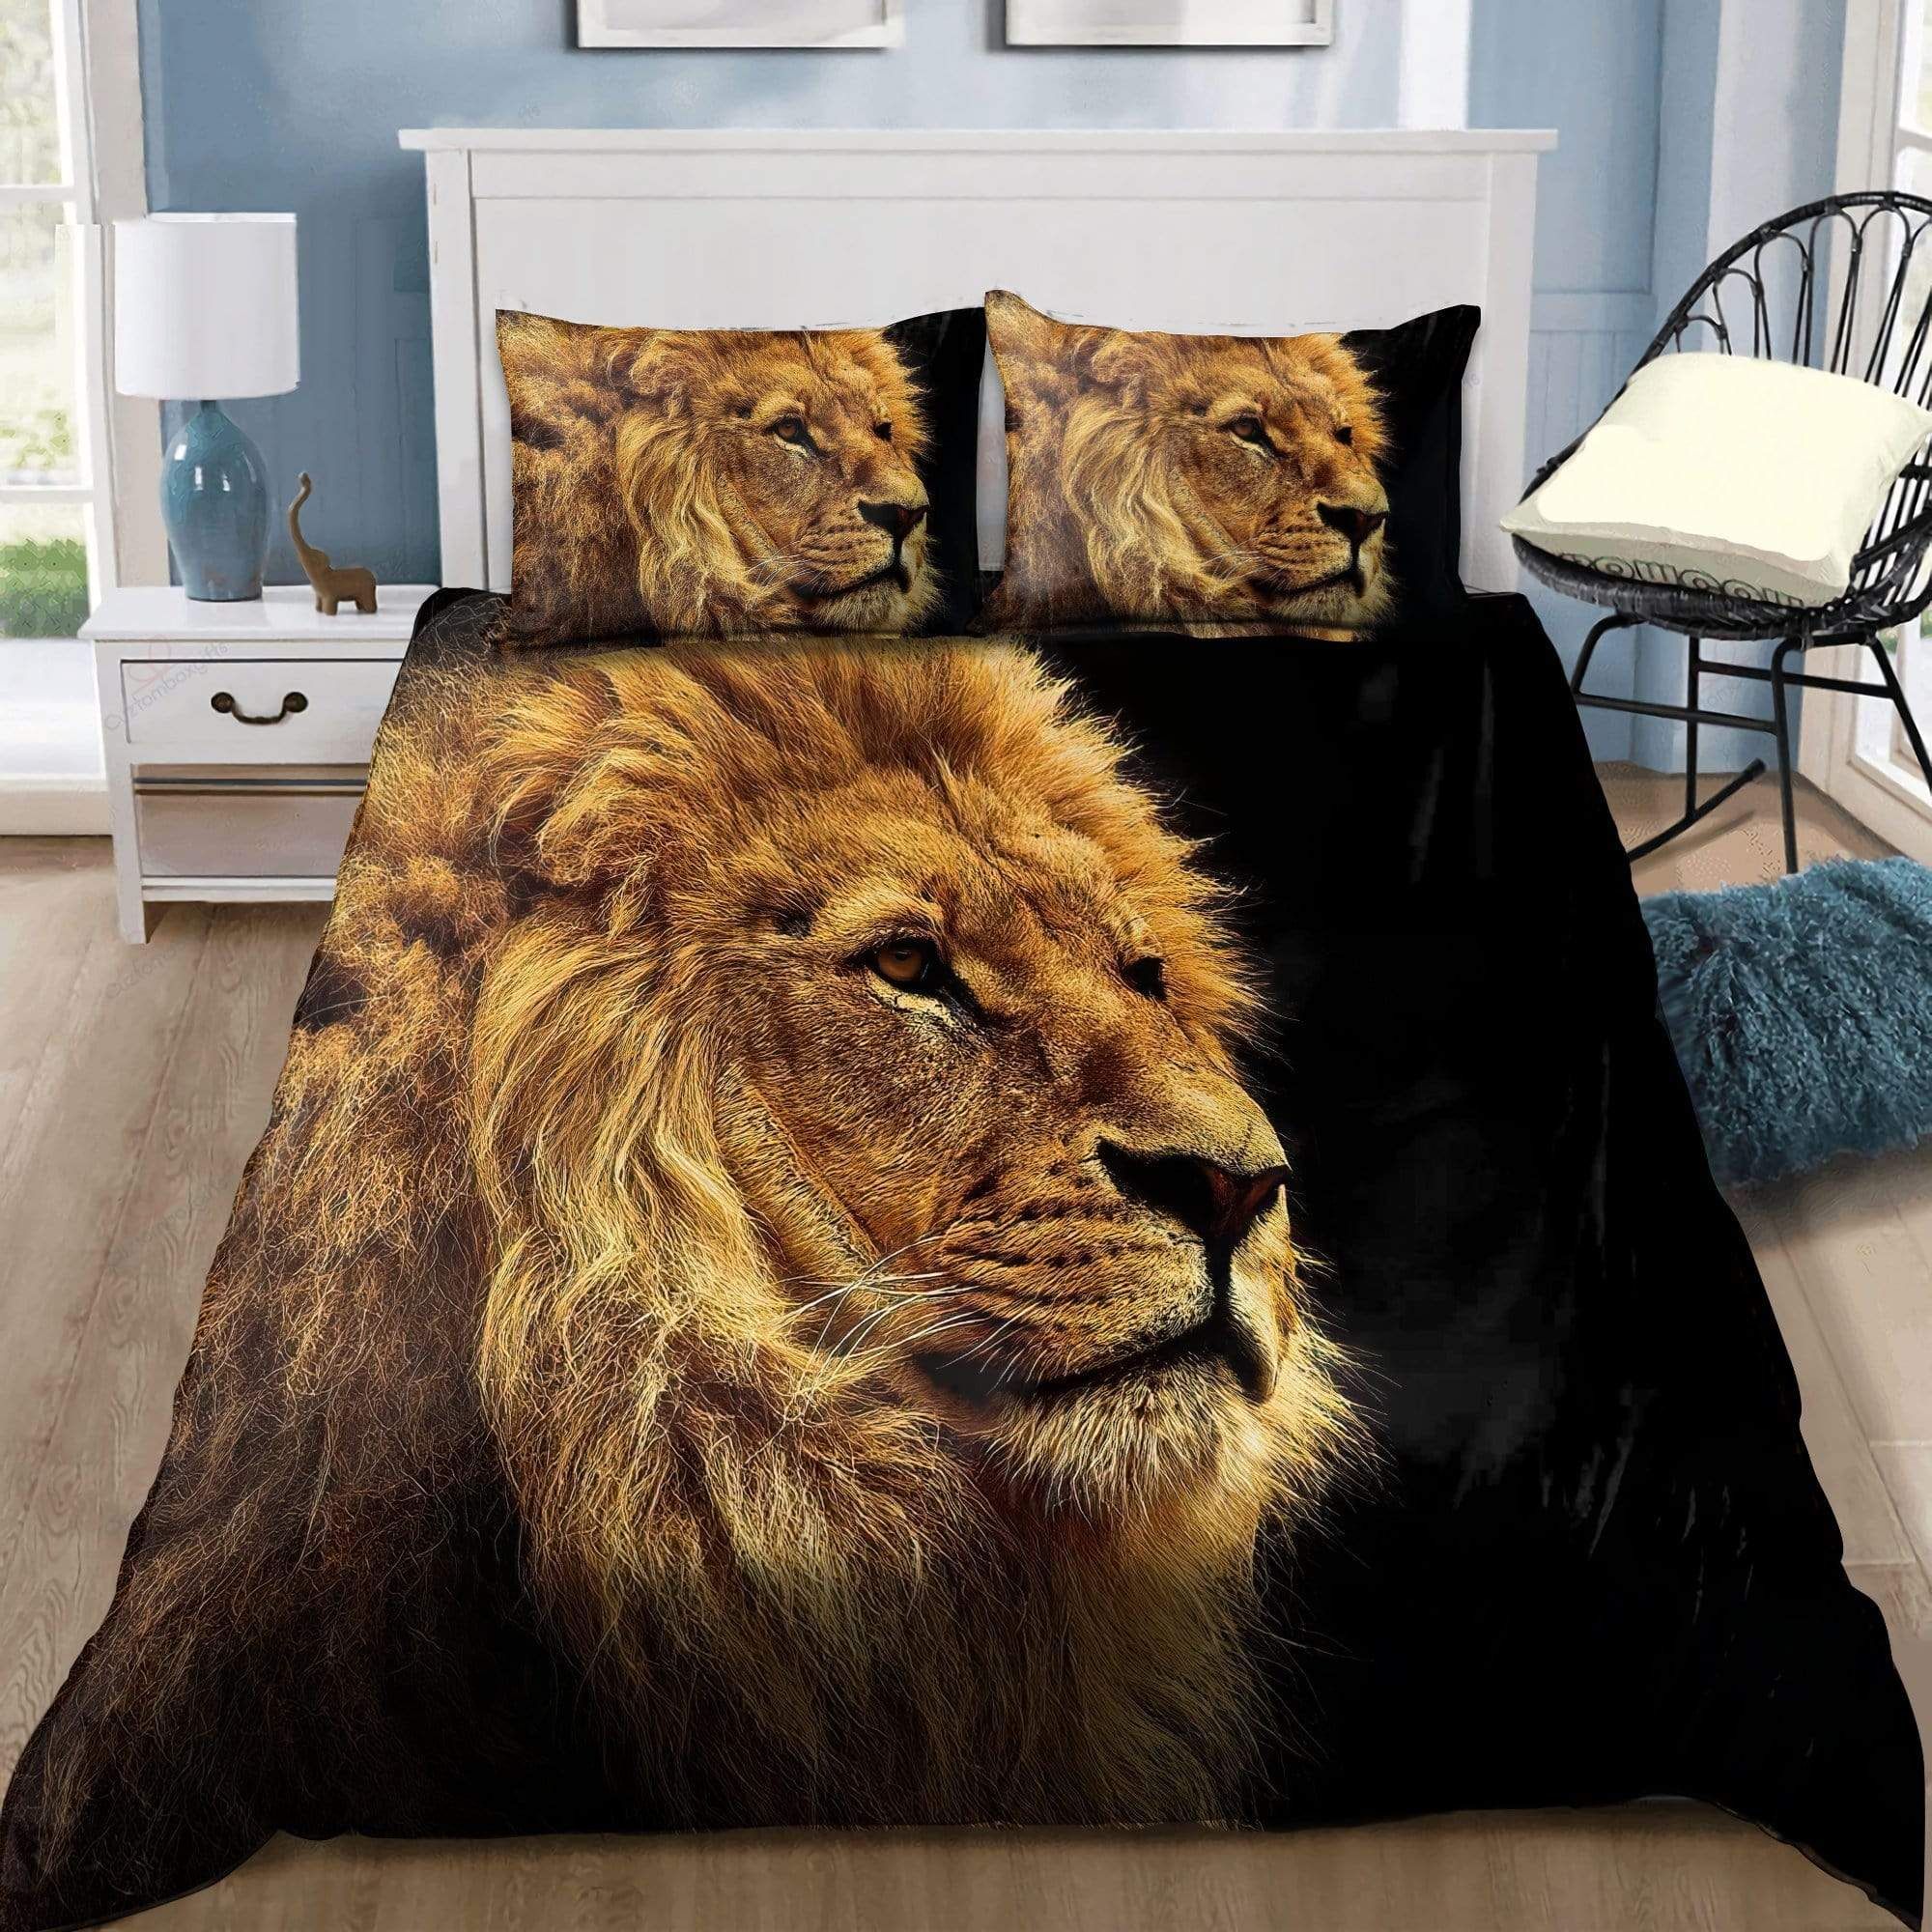 The Best Lion Duvet Cover Bedding Set